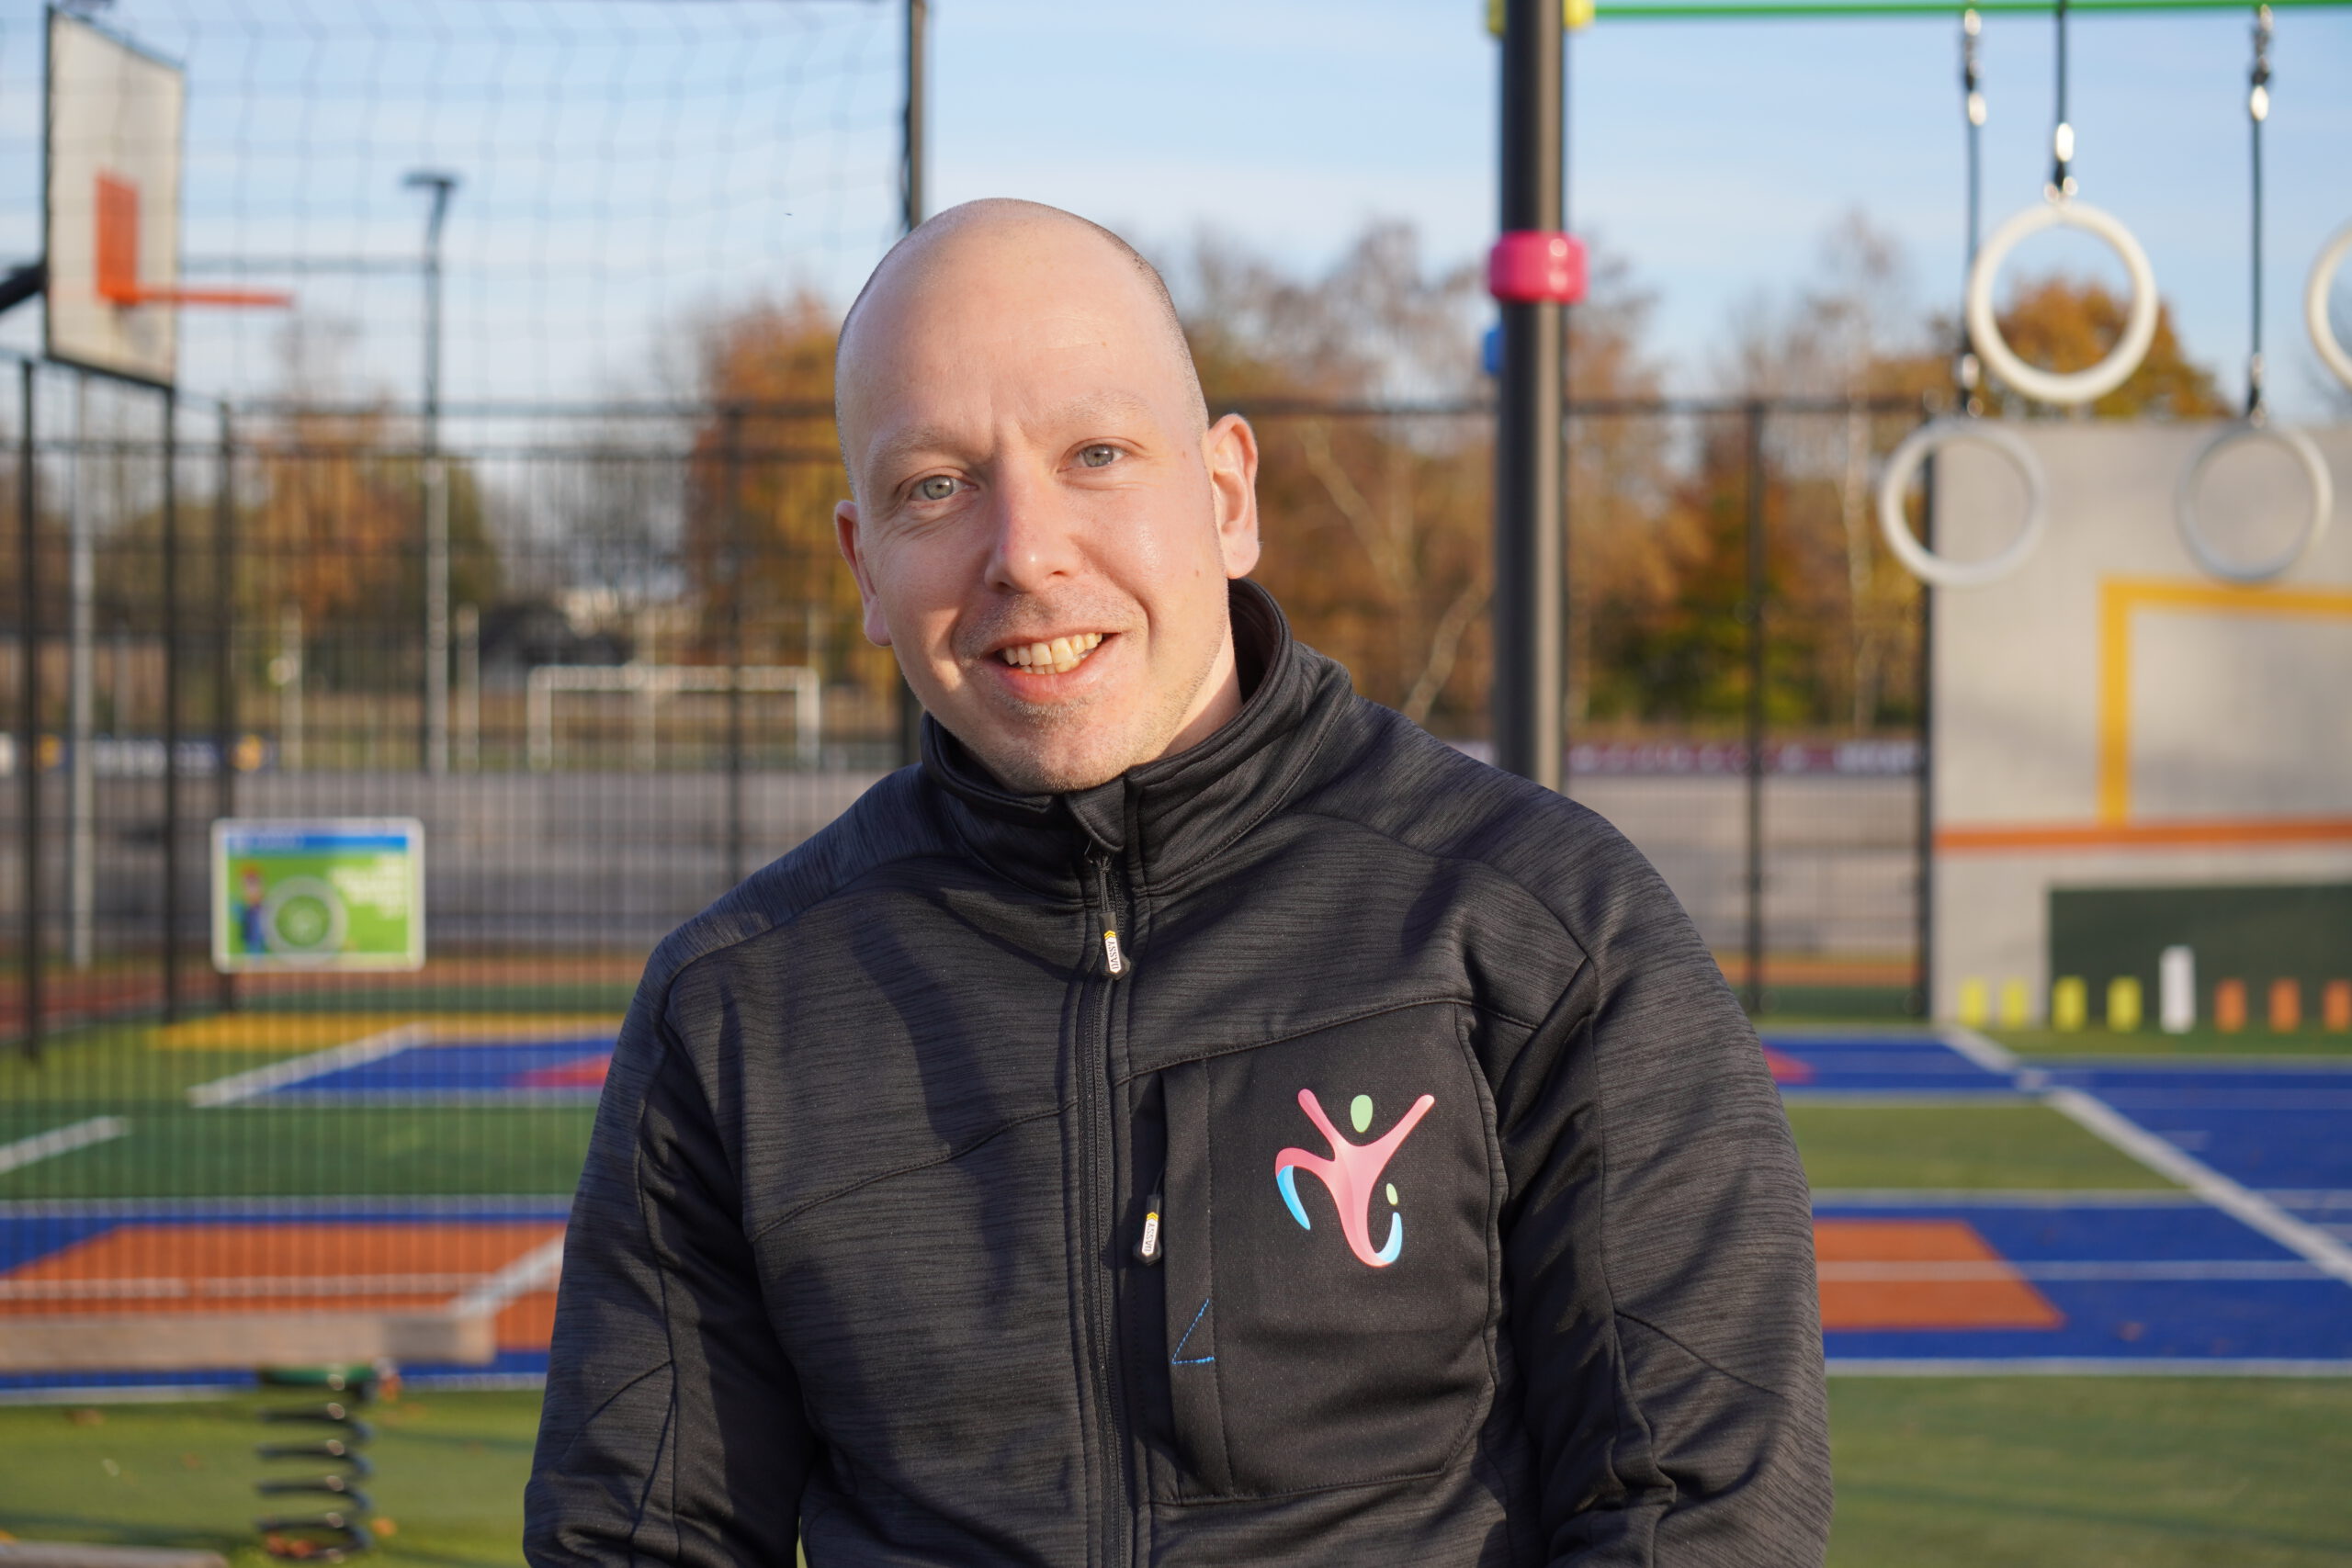 Sportpark coördinator Martin van der Woude